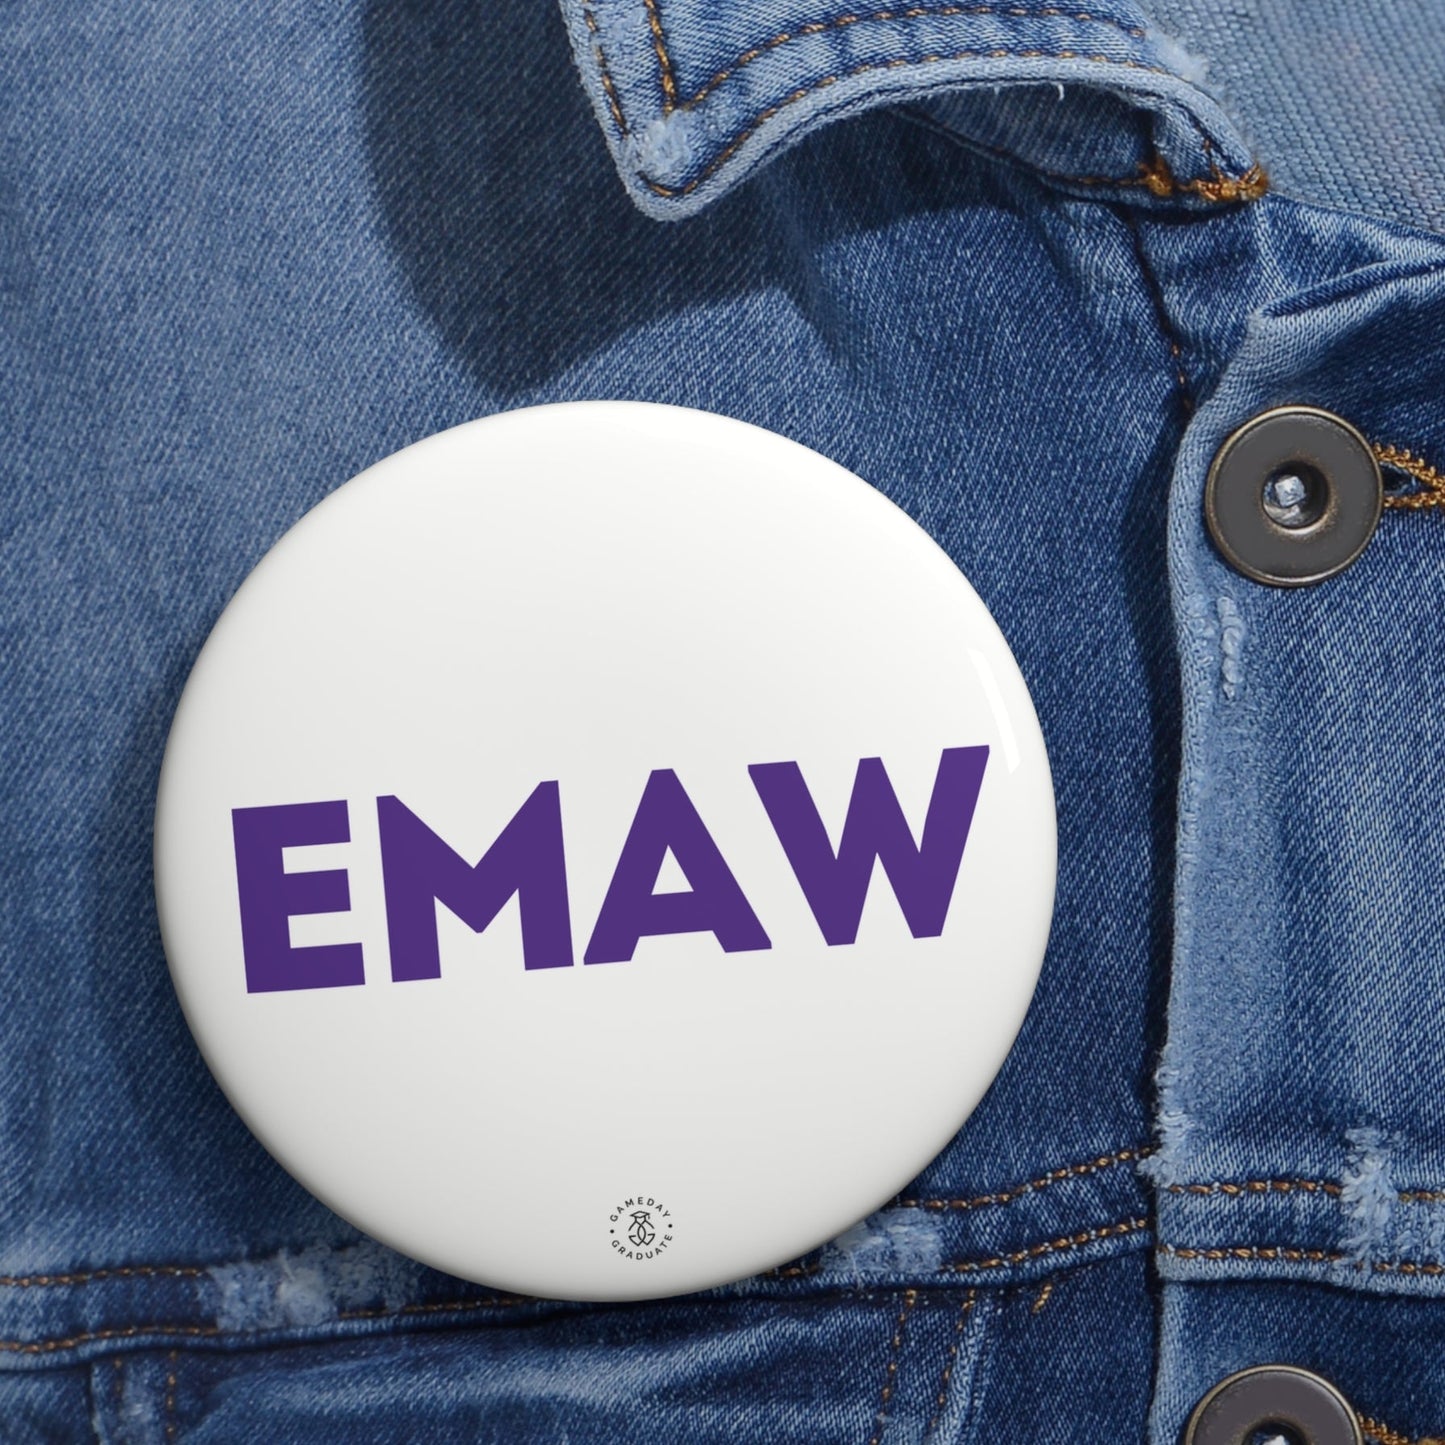 EMAW Button